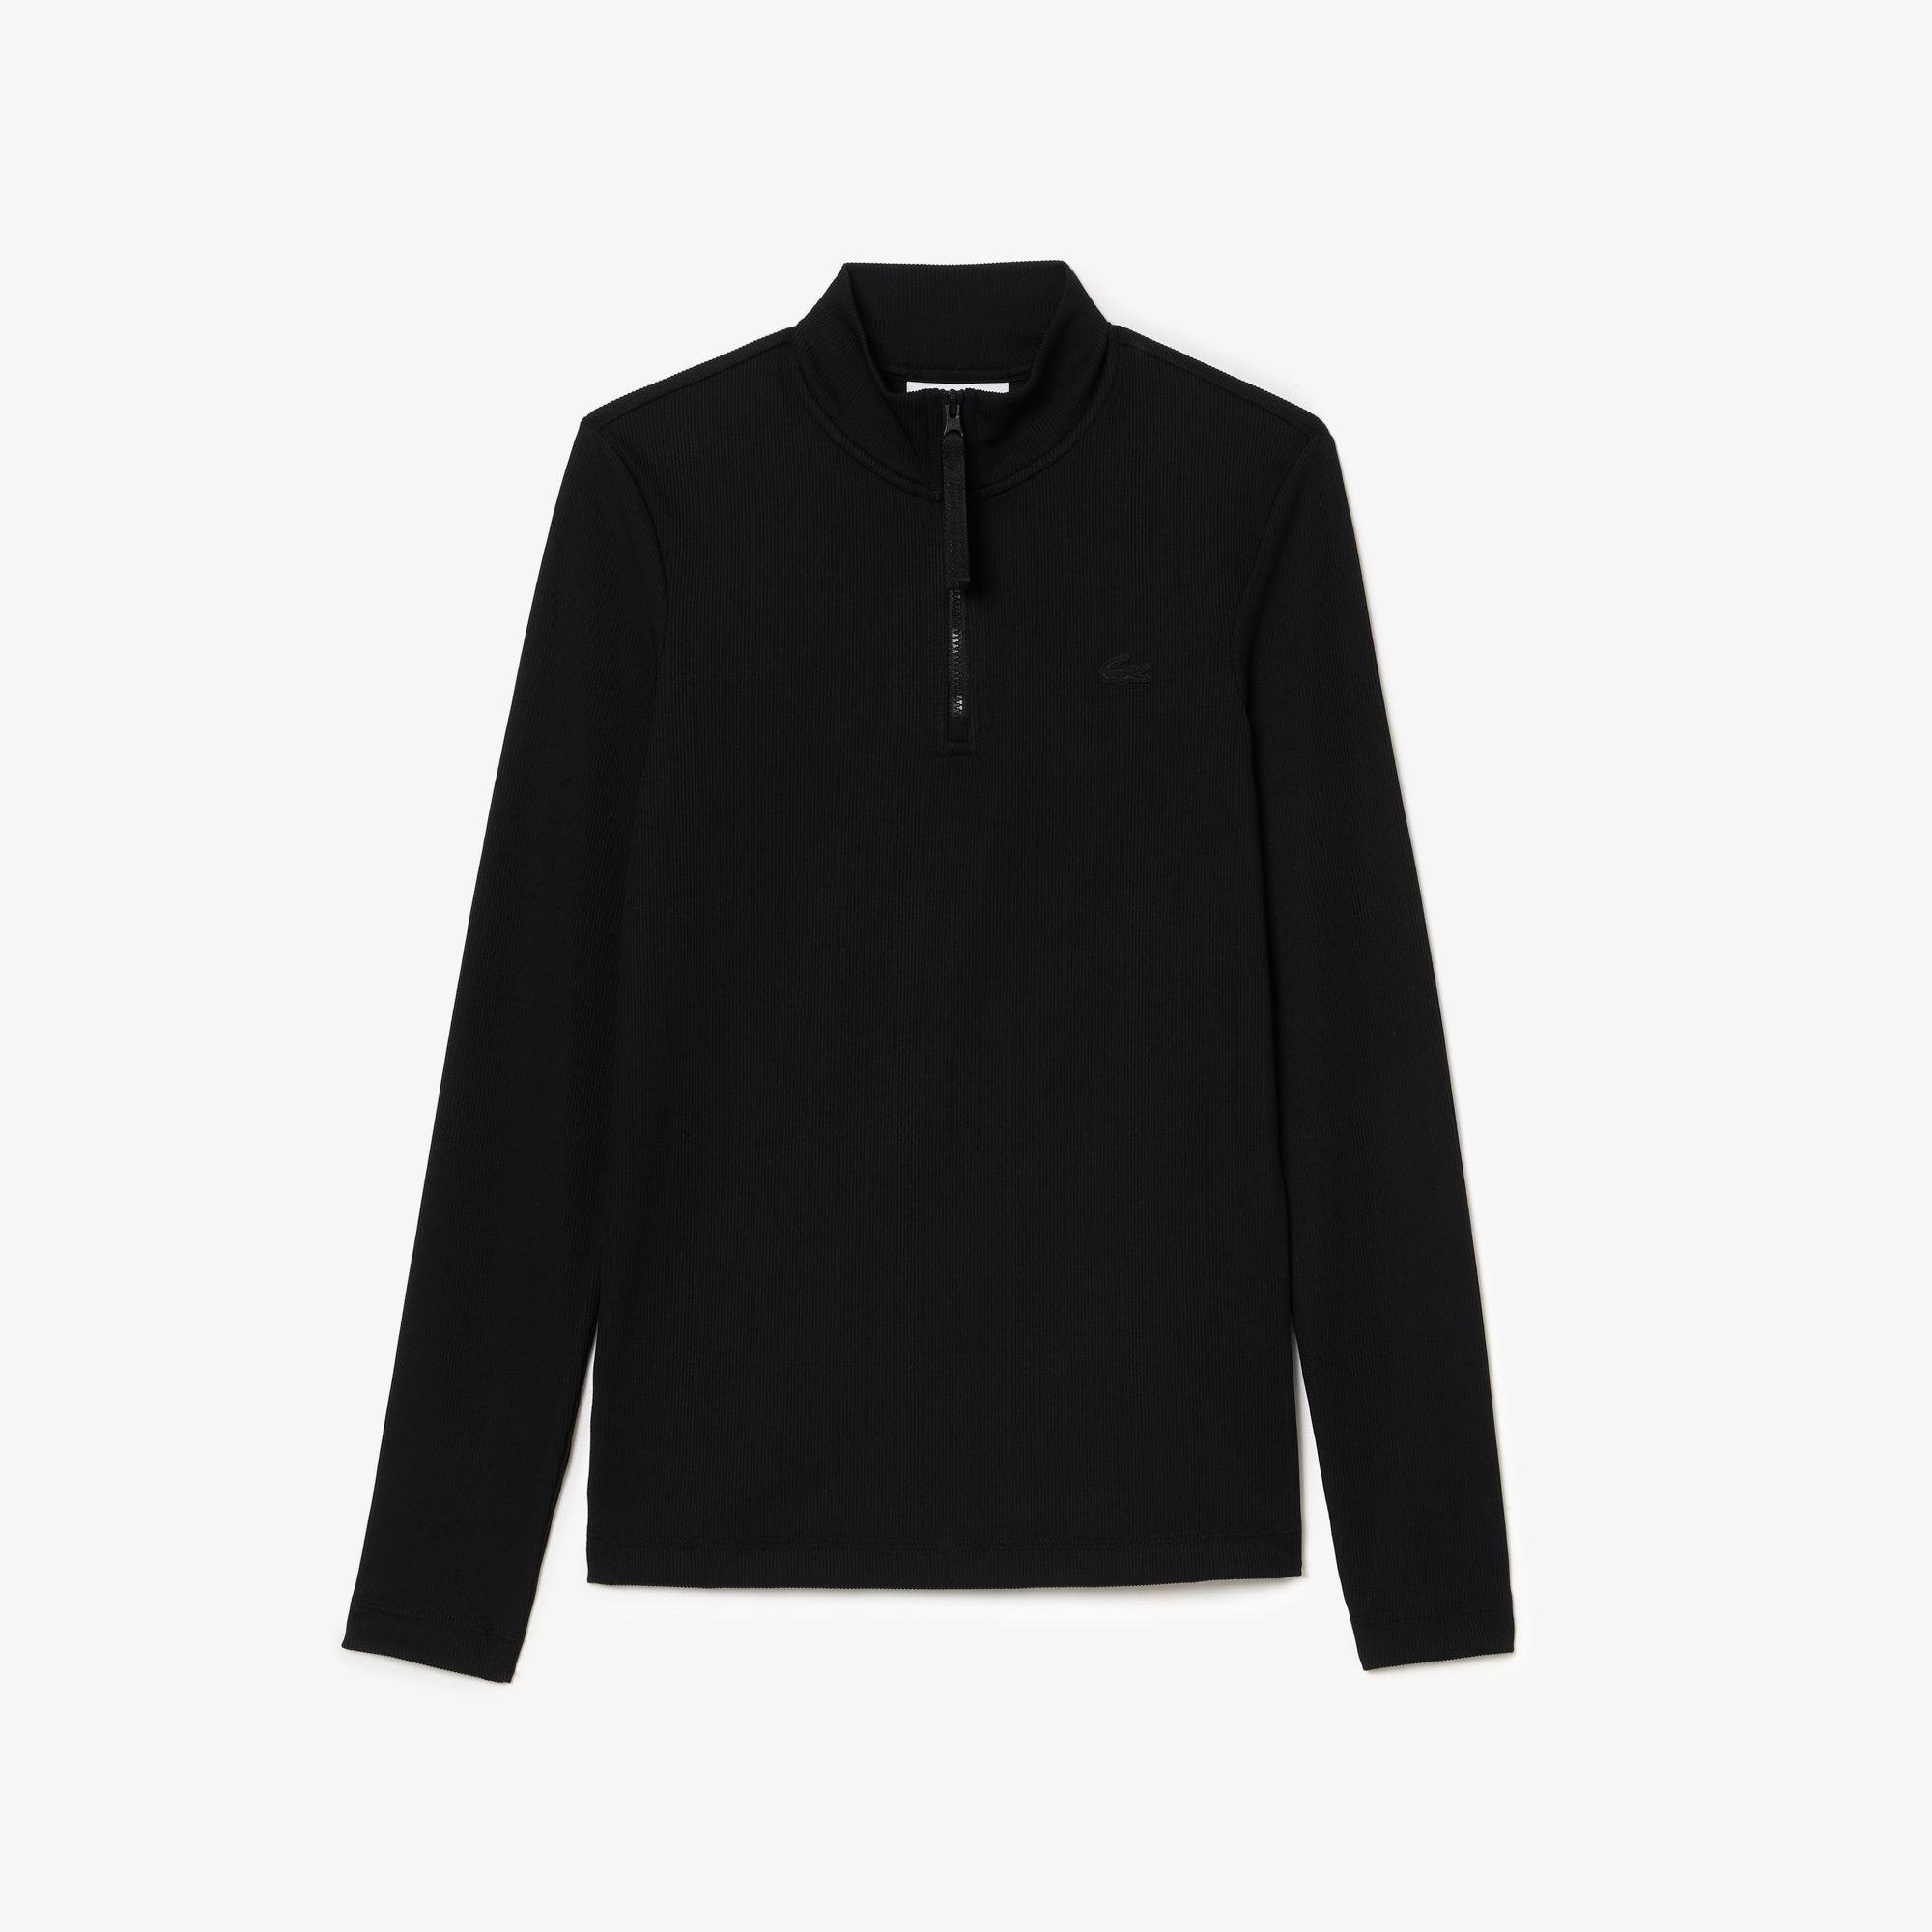 Lacoste Long Sleeved Zip Neck Rib Knit Polo Shirt